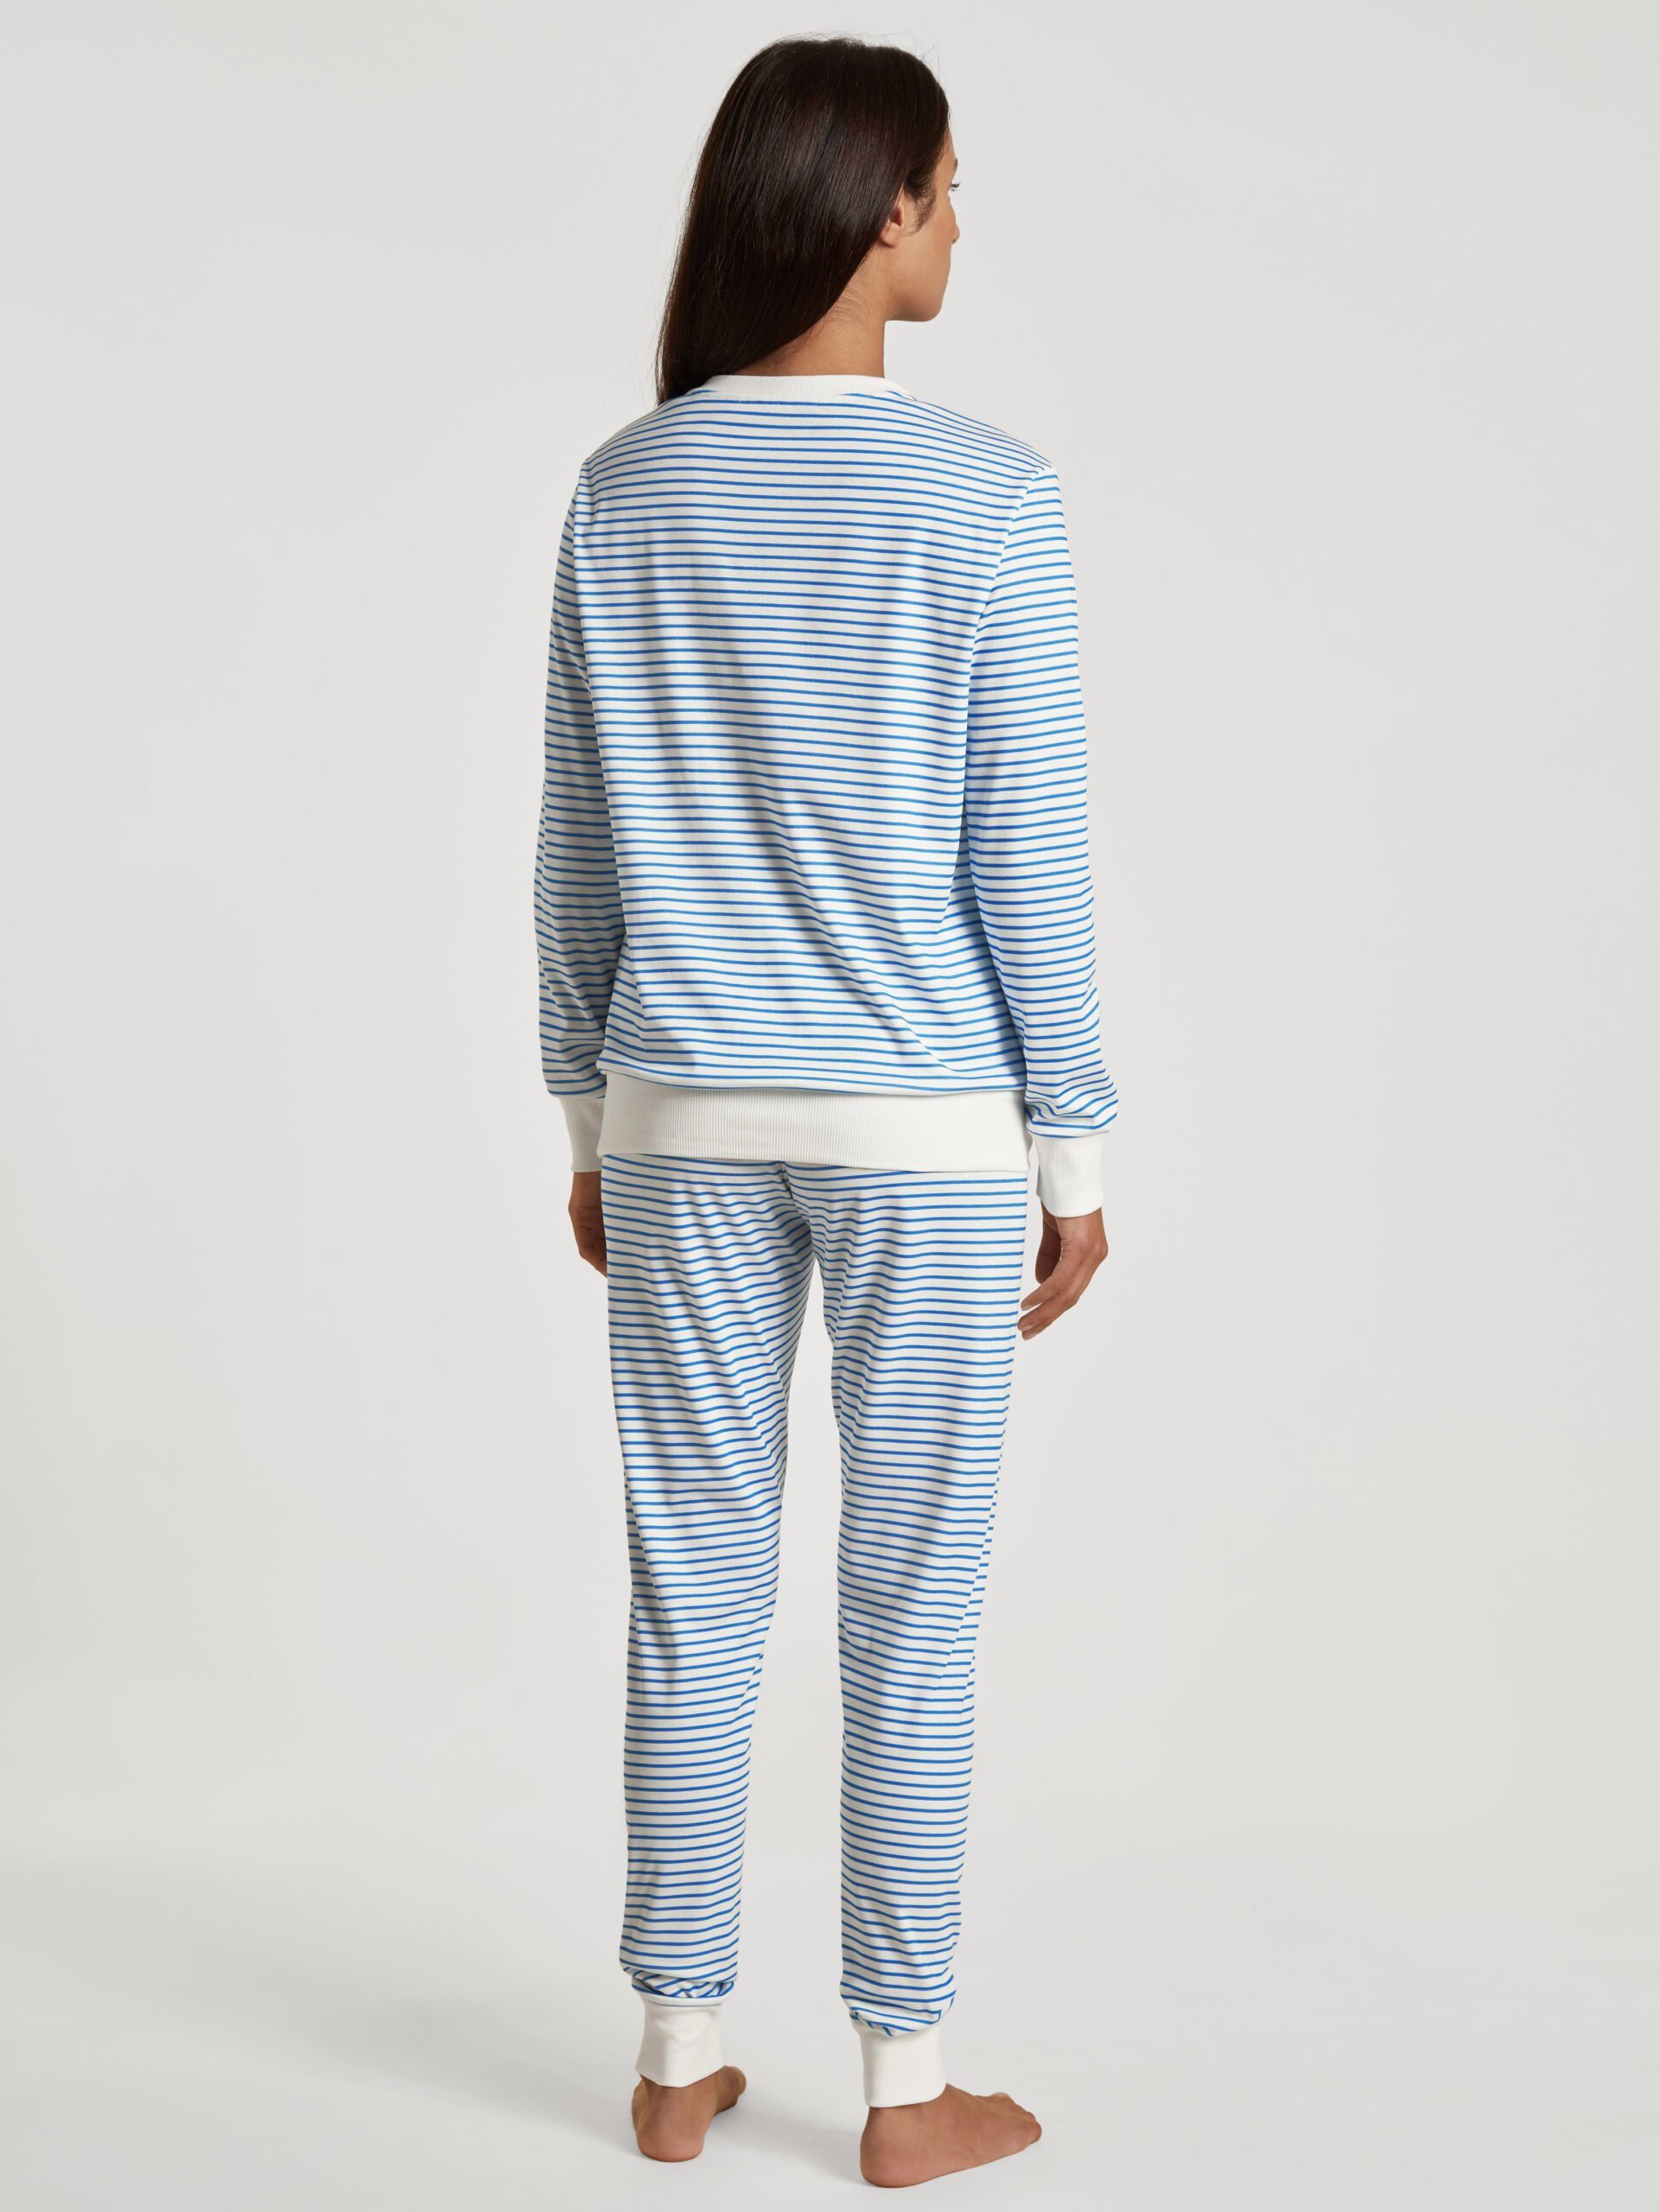 Damen azurit Bündchenpyjama 42454 1 CALIDA tlg., 1 Stück, (1 Calida Pyjama Stück) blue